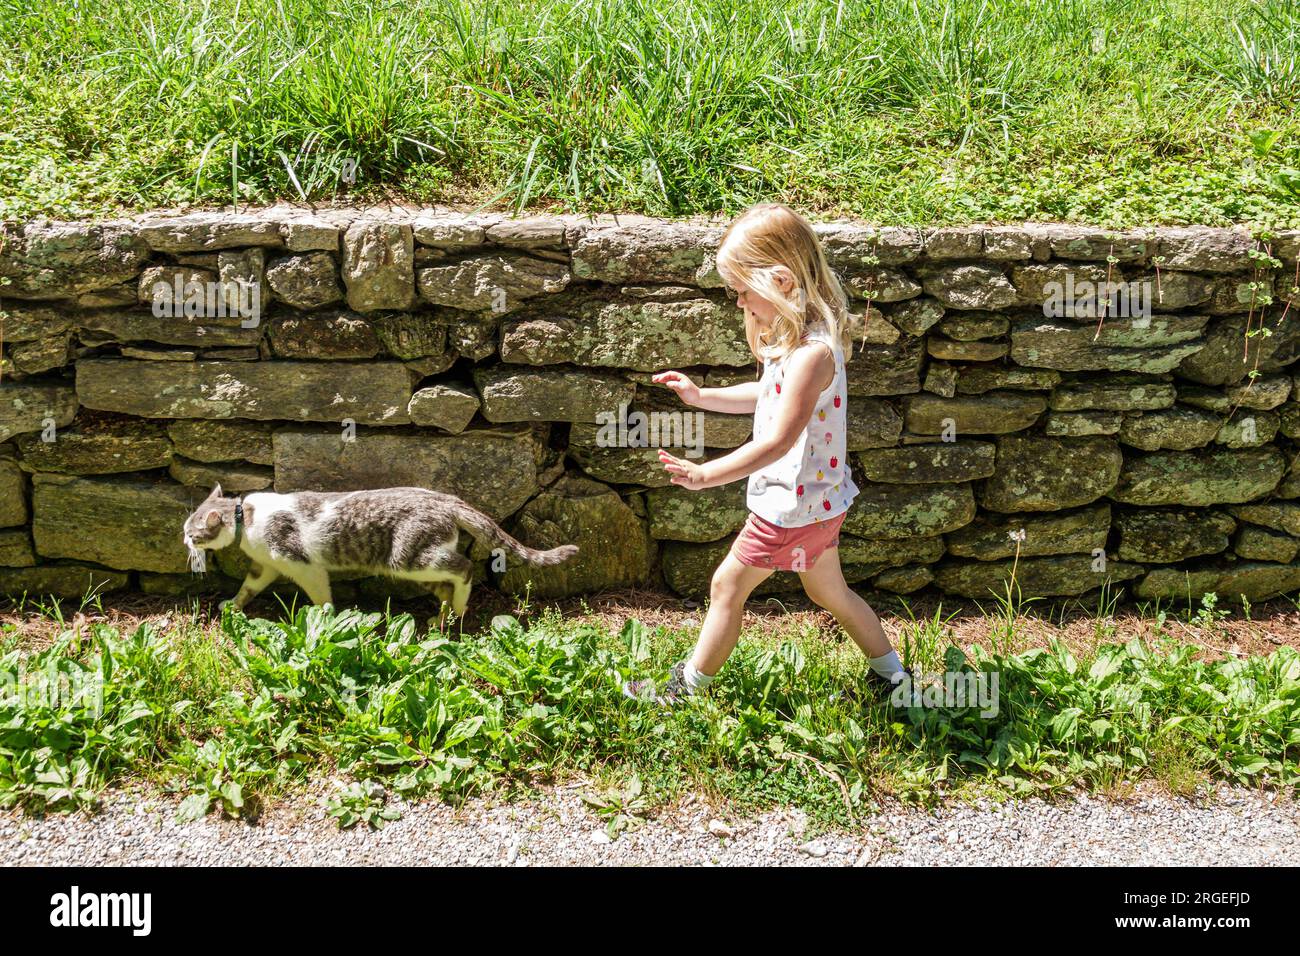 Flat Rock North Carolina,Appalachian Mountains,Carl Sandburg Home National Historic Site,farm cat,following pretending,child children childhood,kid,gi Stock Photo